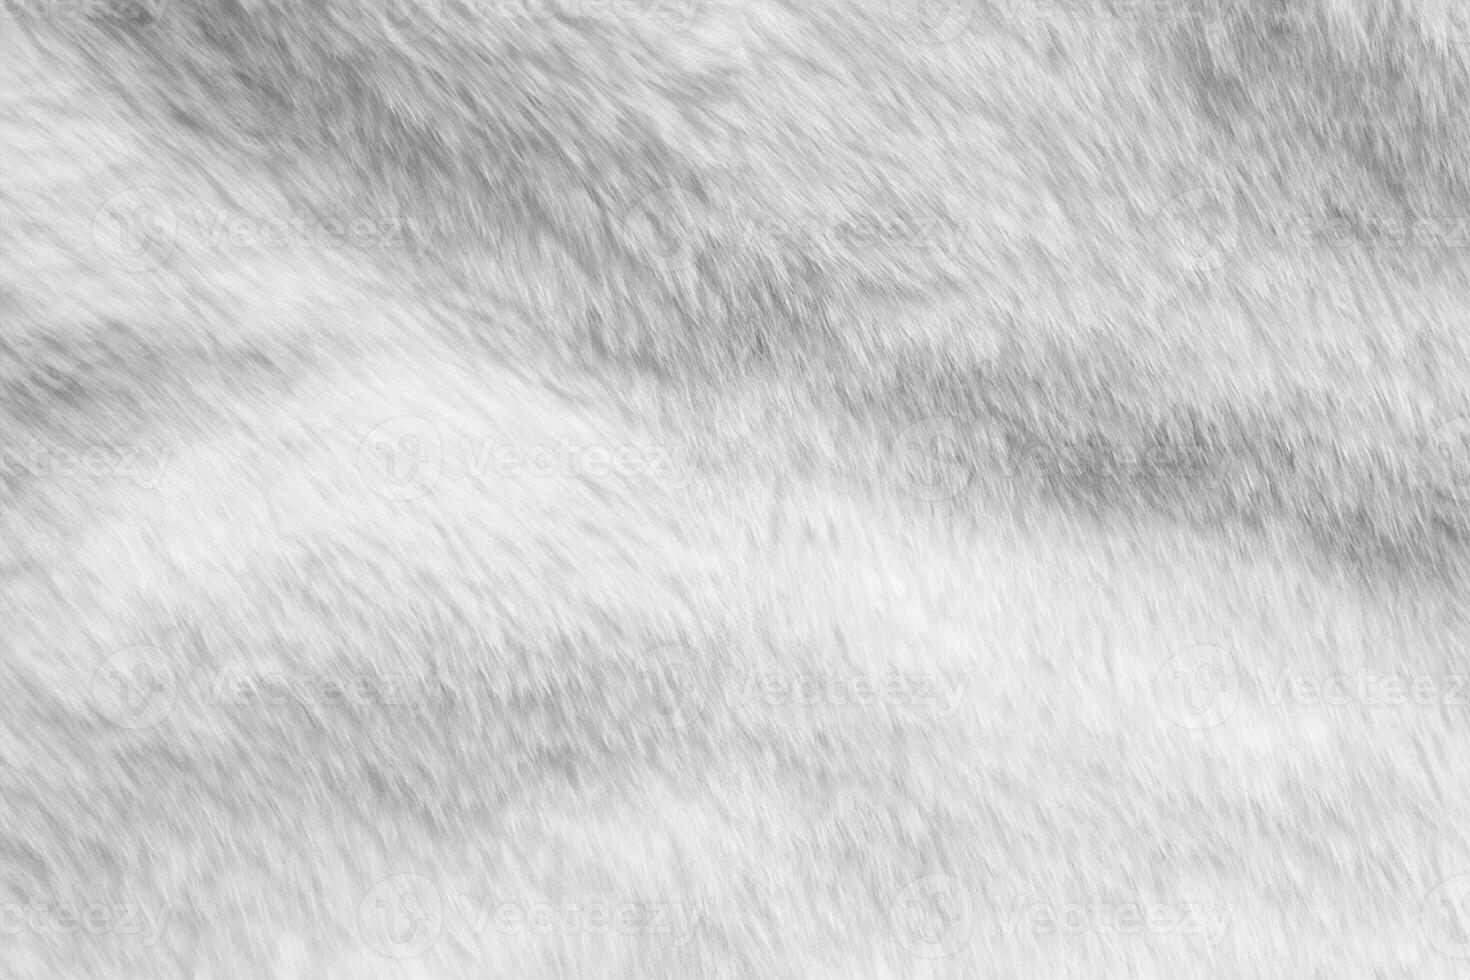 vit päls tyg textur bakgrund foto